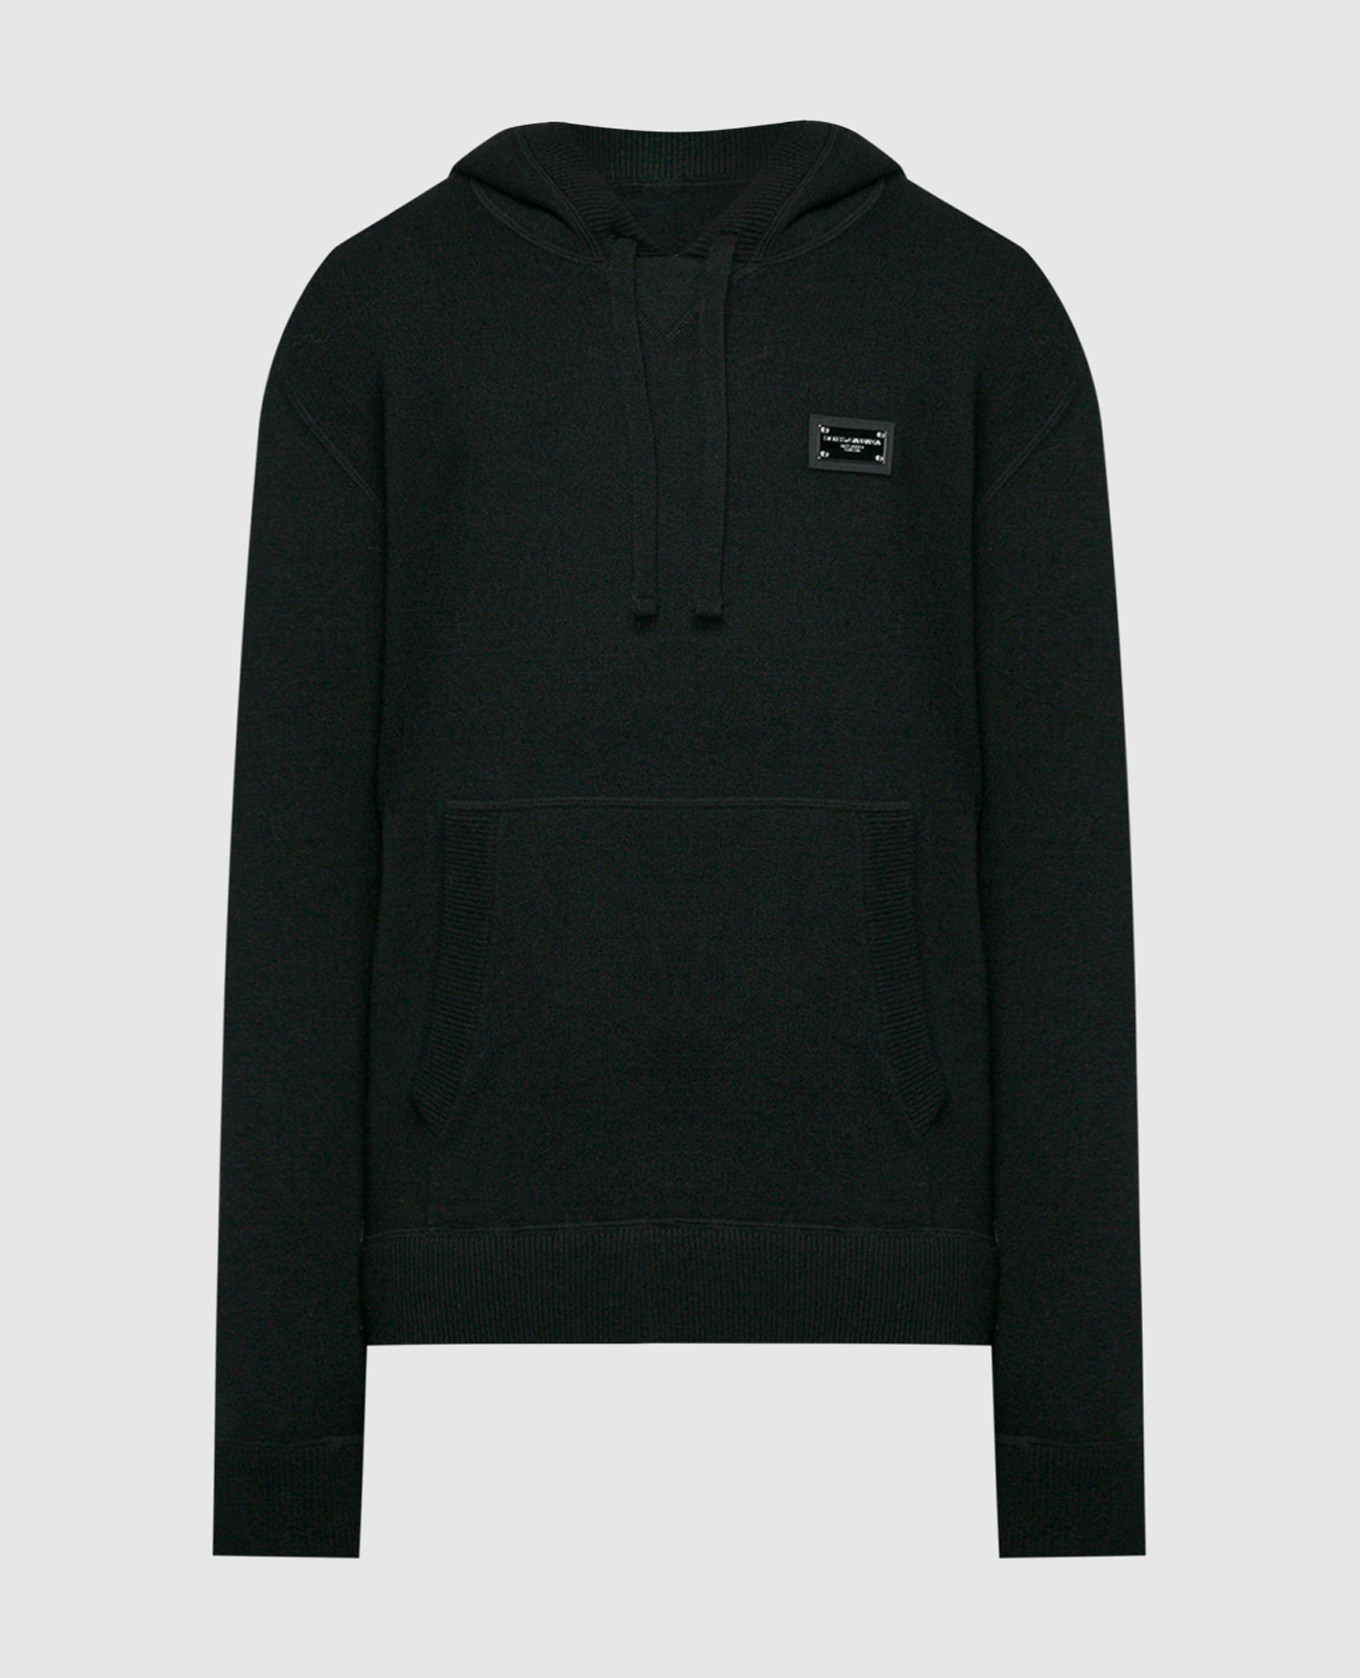 Black hoodie with metallic logo